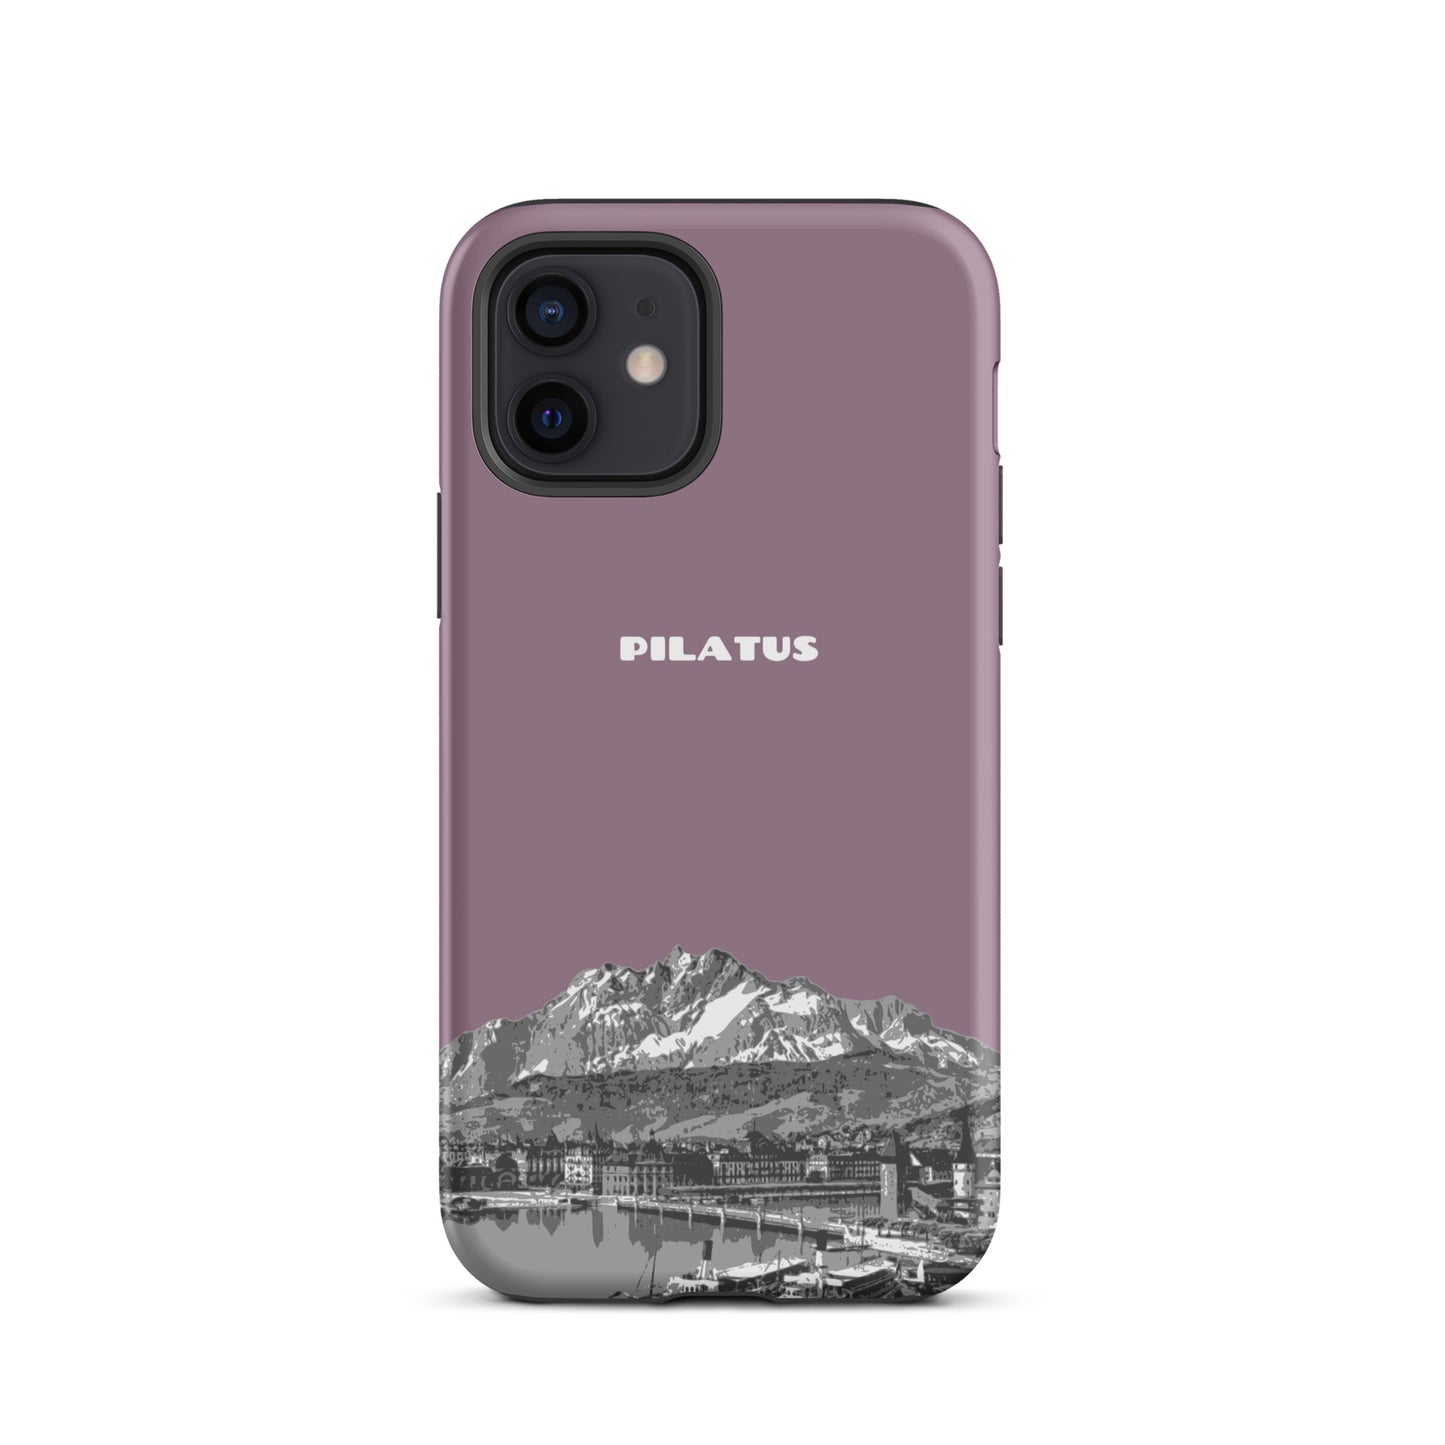 iPhone Case - Pilatus - Pastellviolett